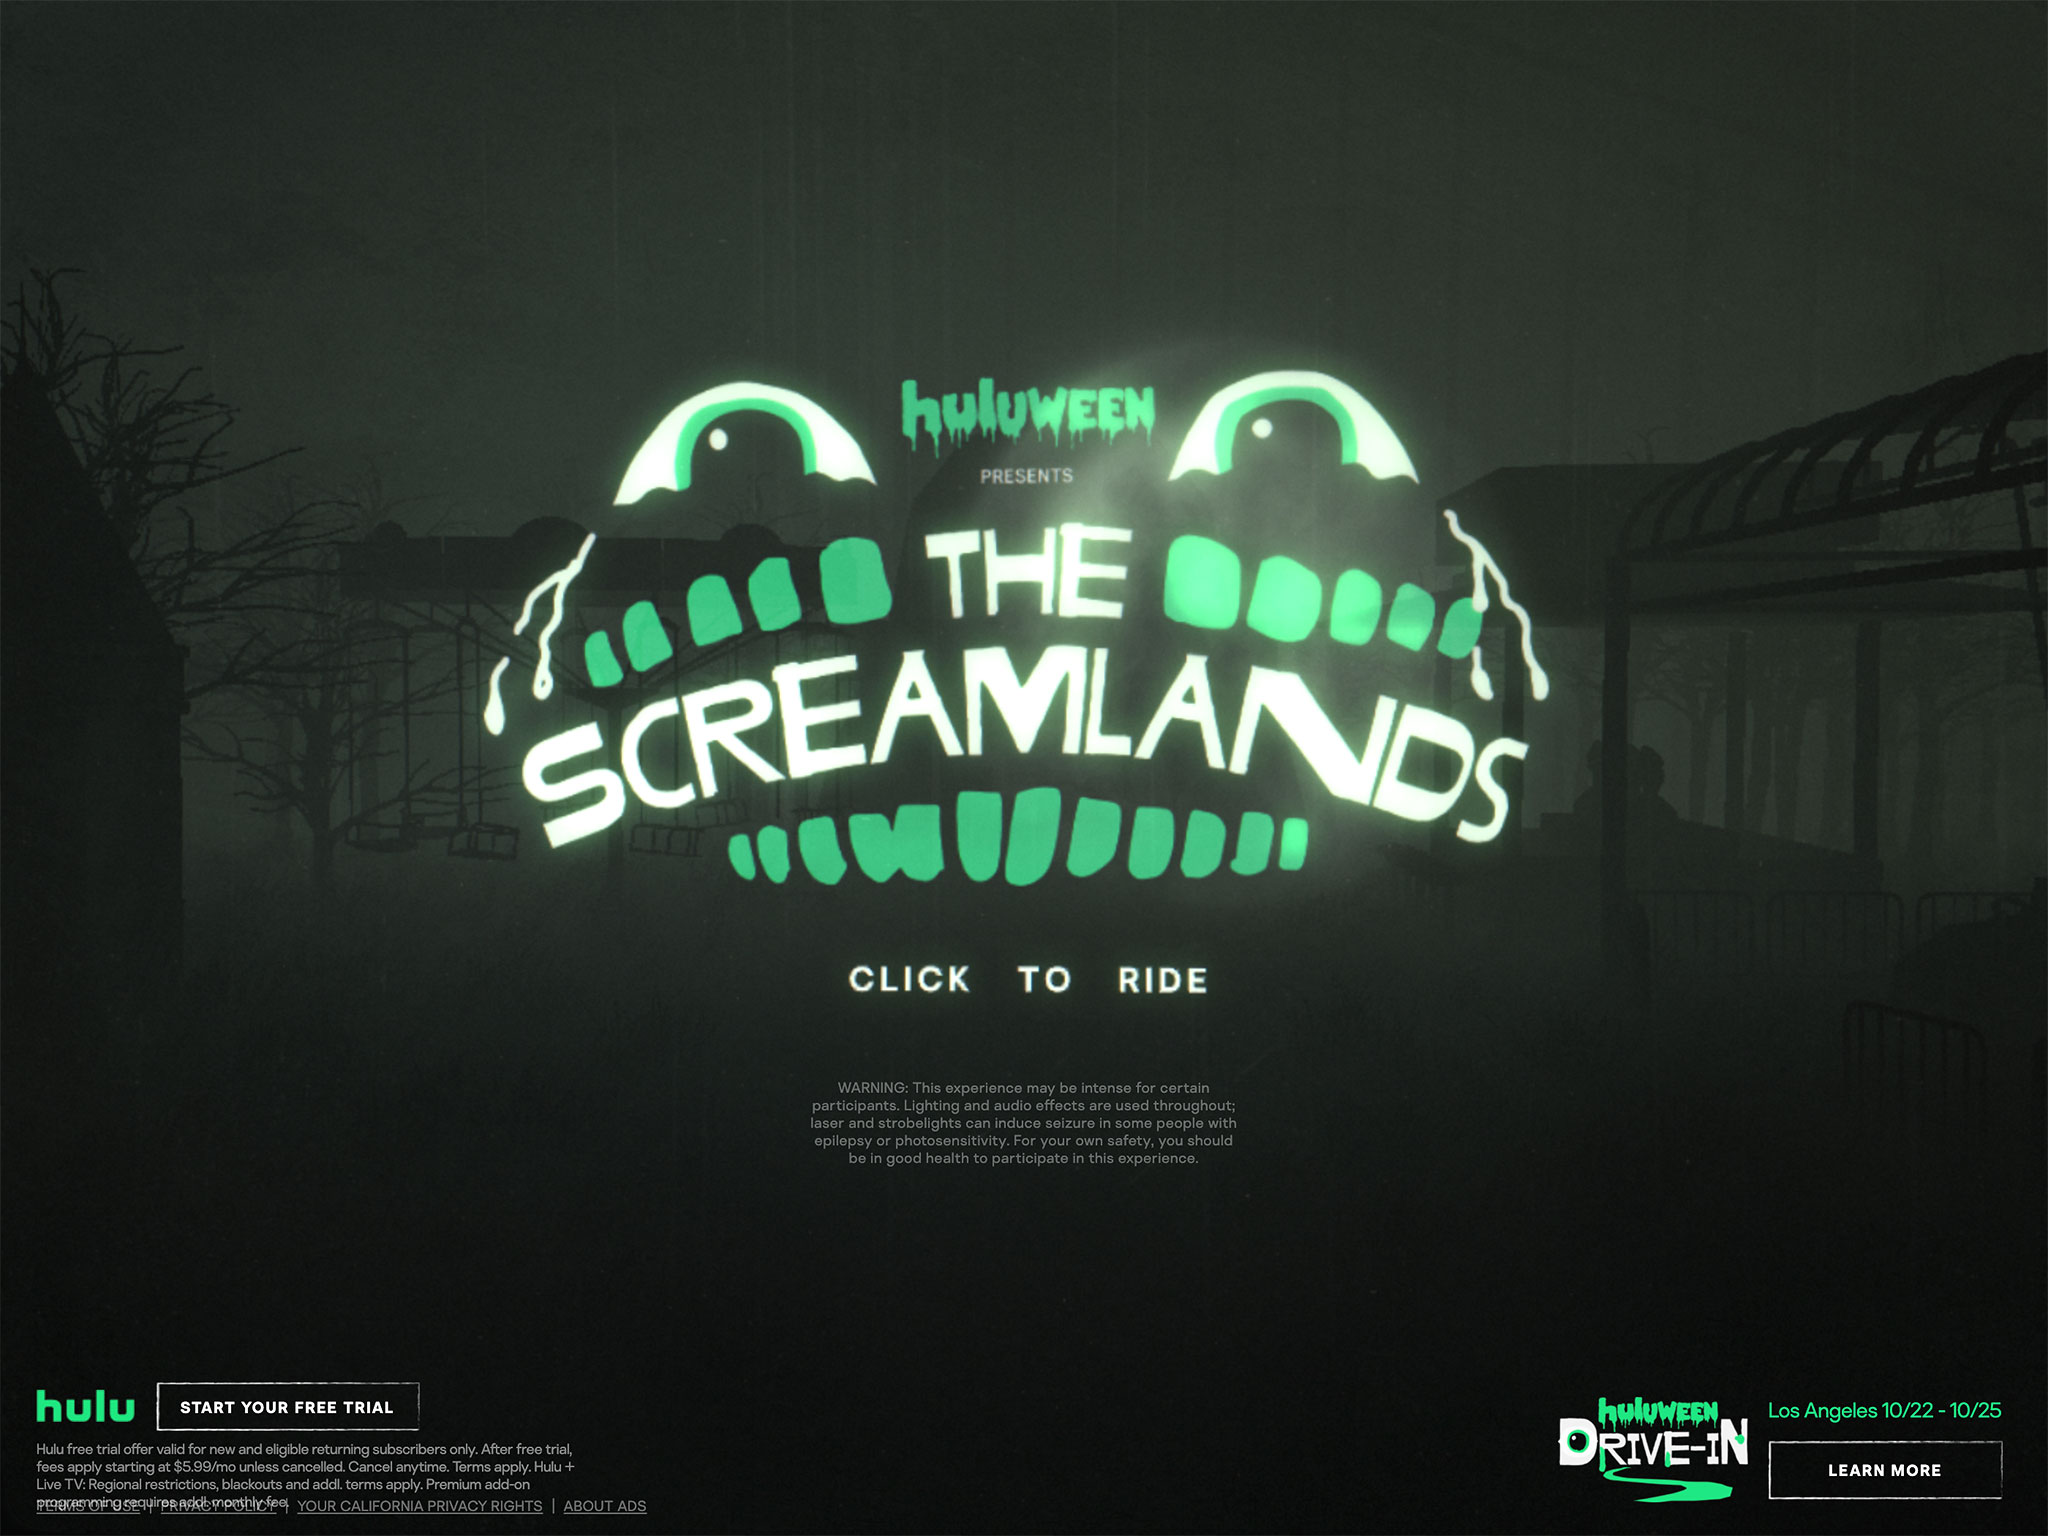 Huluween – The Screamlands